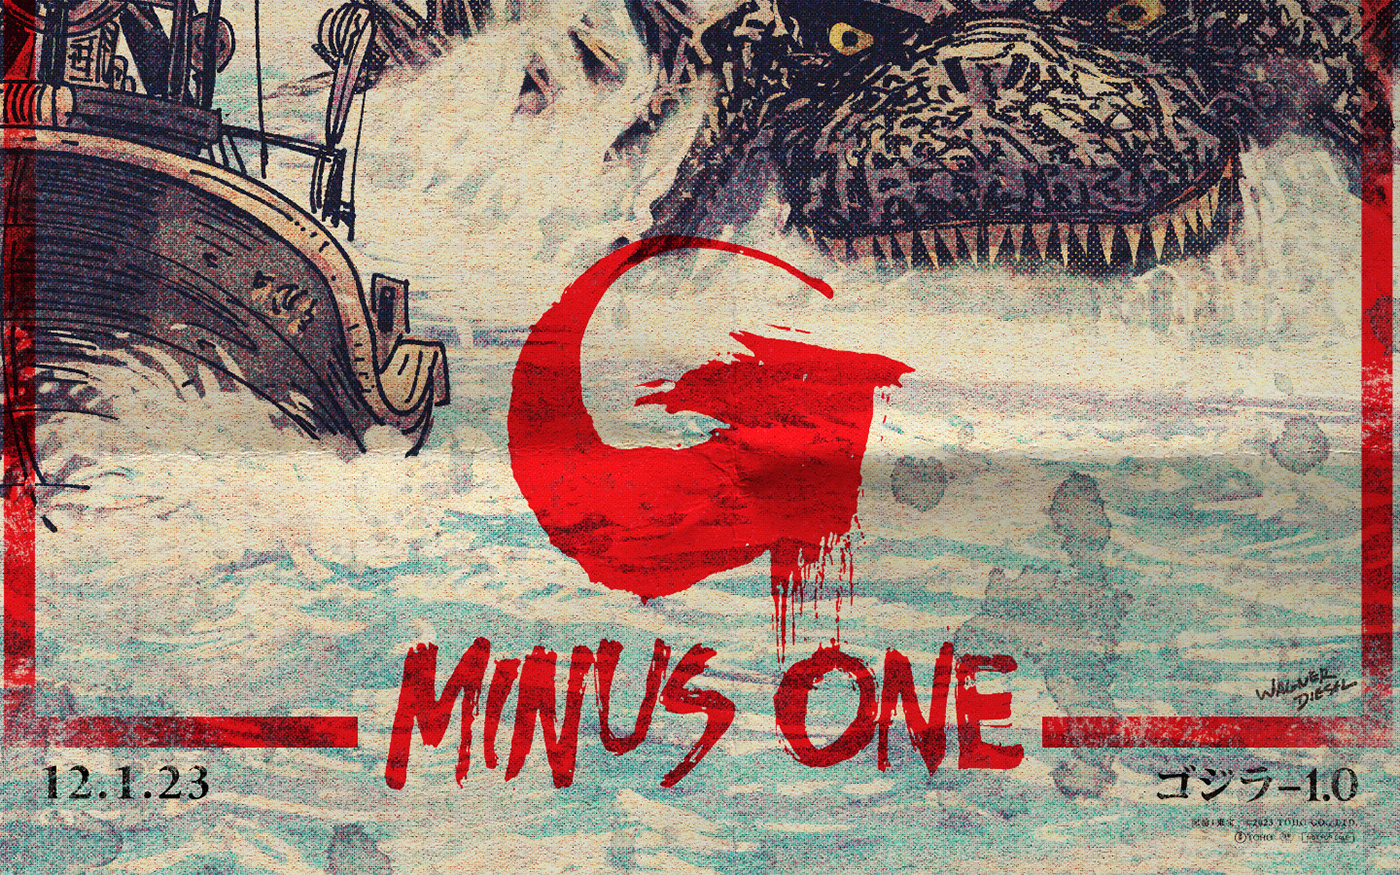 godzilla kaiju monster creature japan Film   publishing   Advertising  posterdesign alternative movie poster